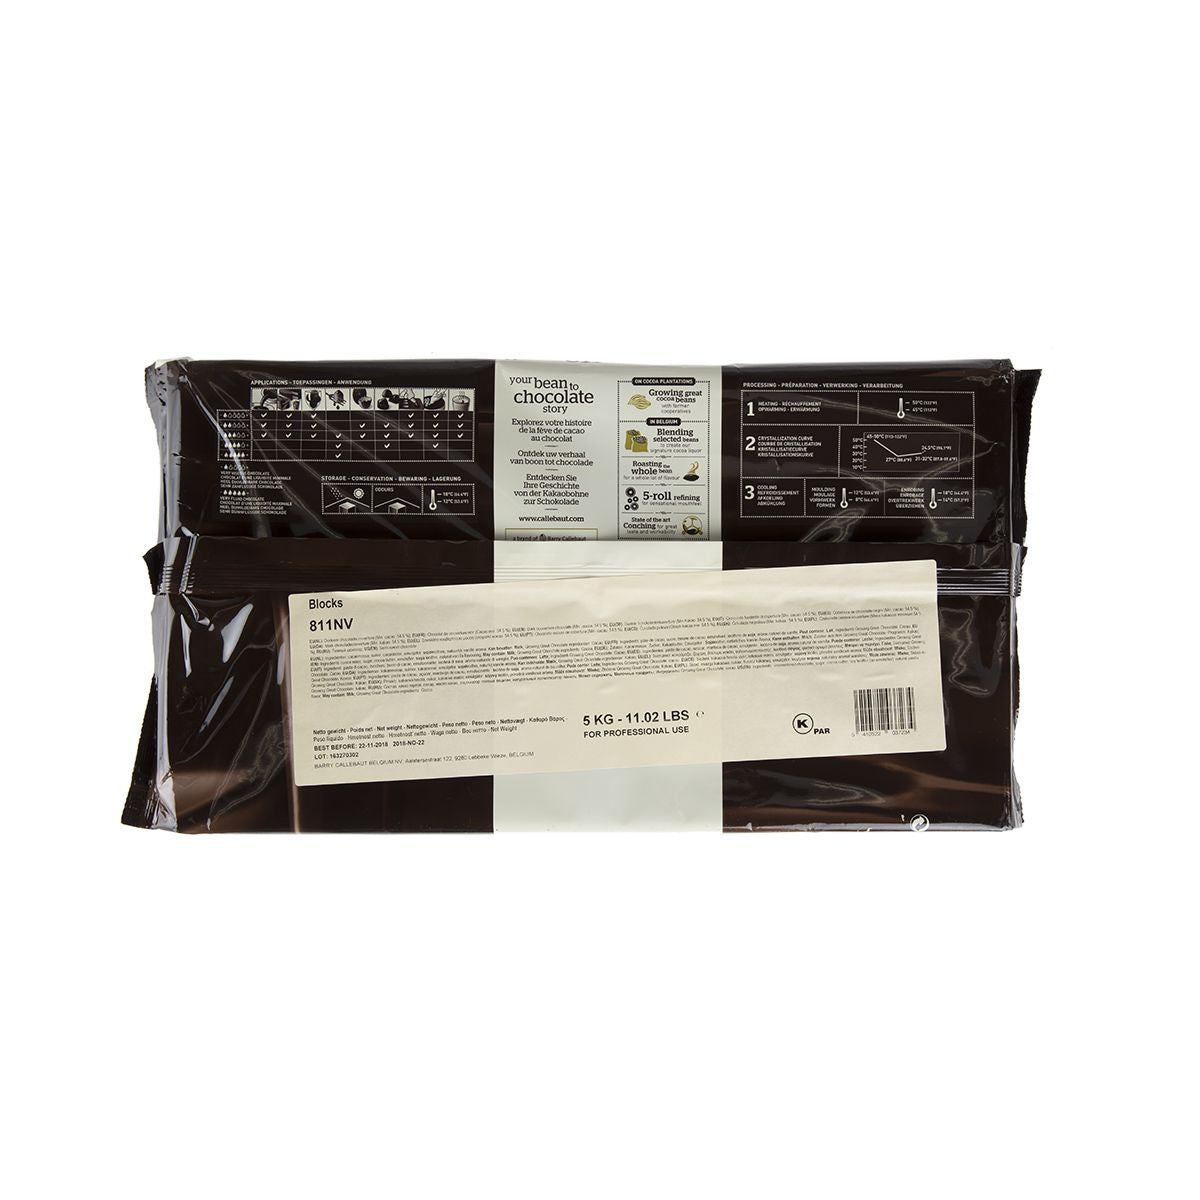 Barry Callebaut 53.8% Dark Chocolate 11 lb Block